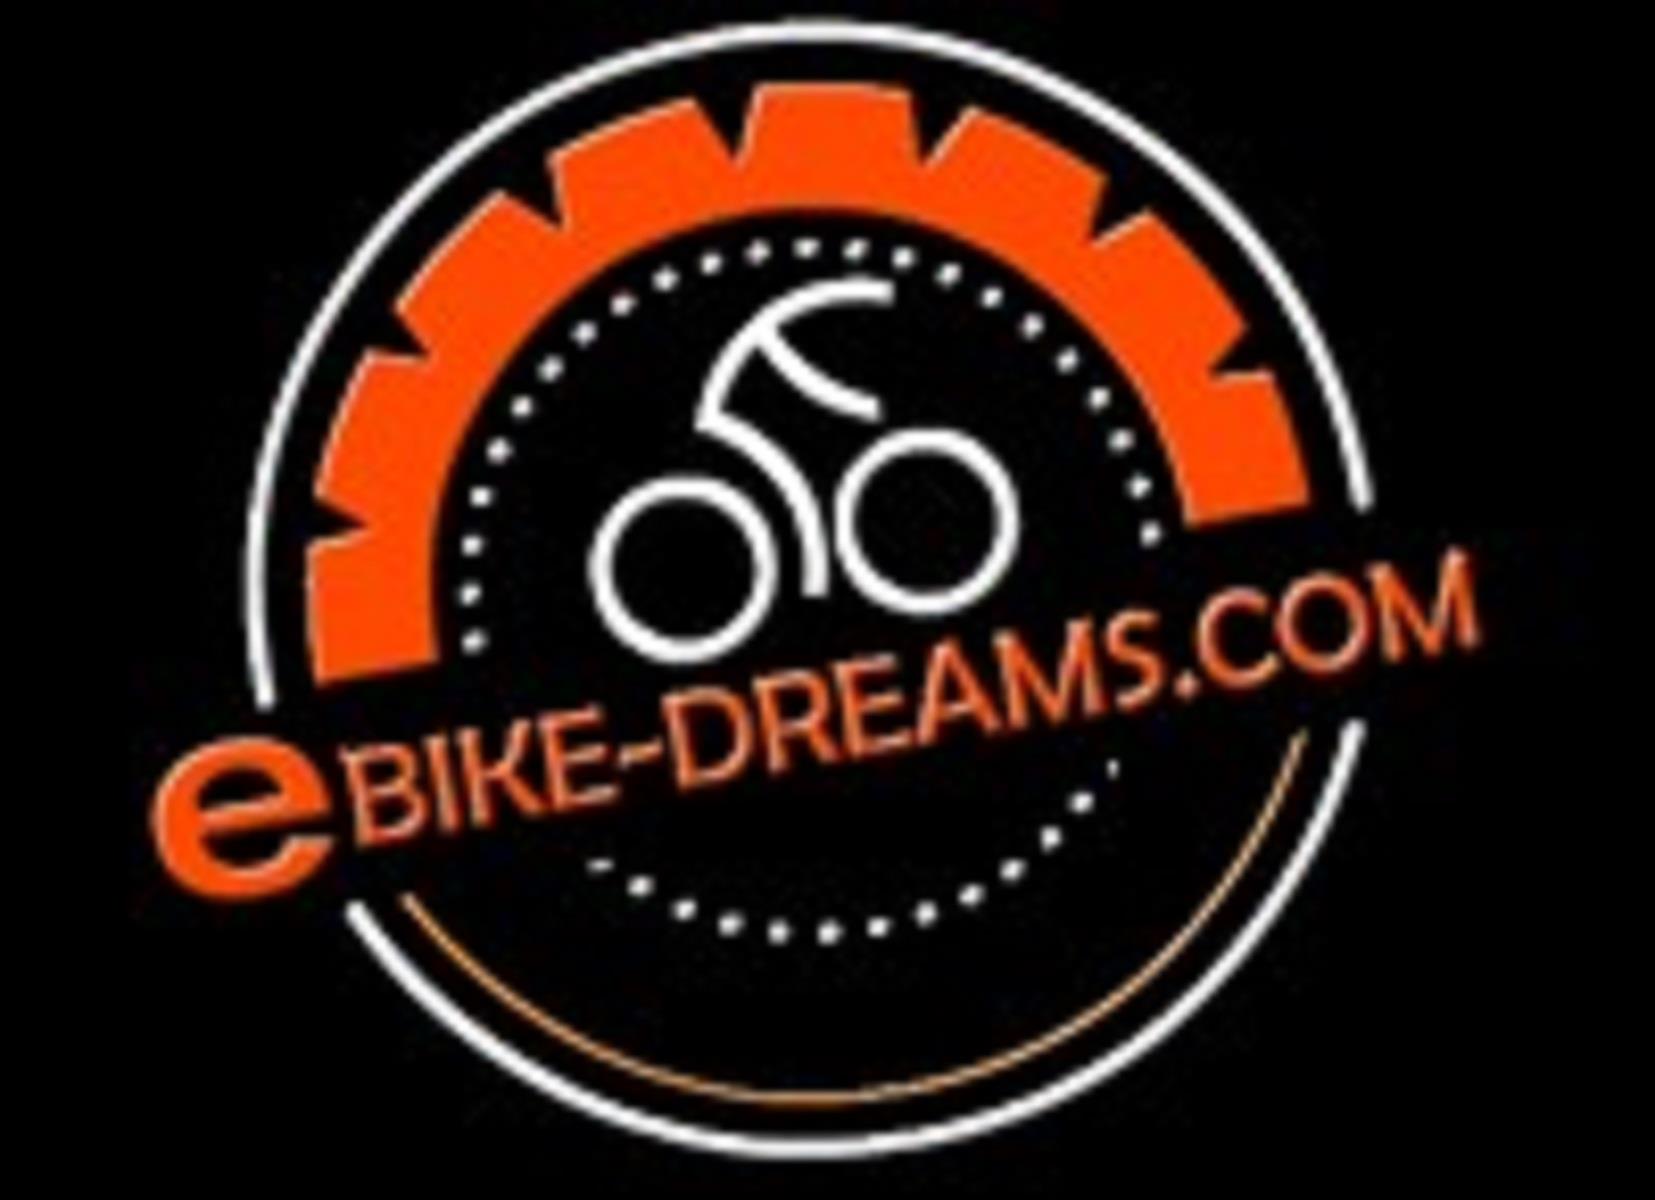 Fahrradverleih E-Bike-Dreams